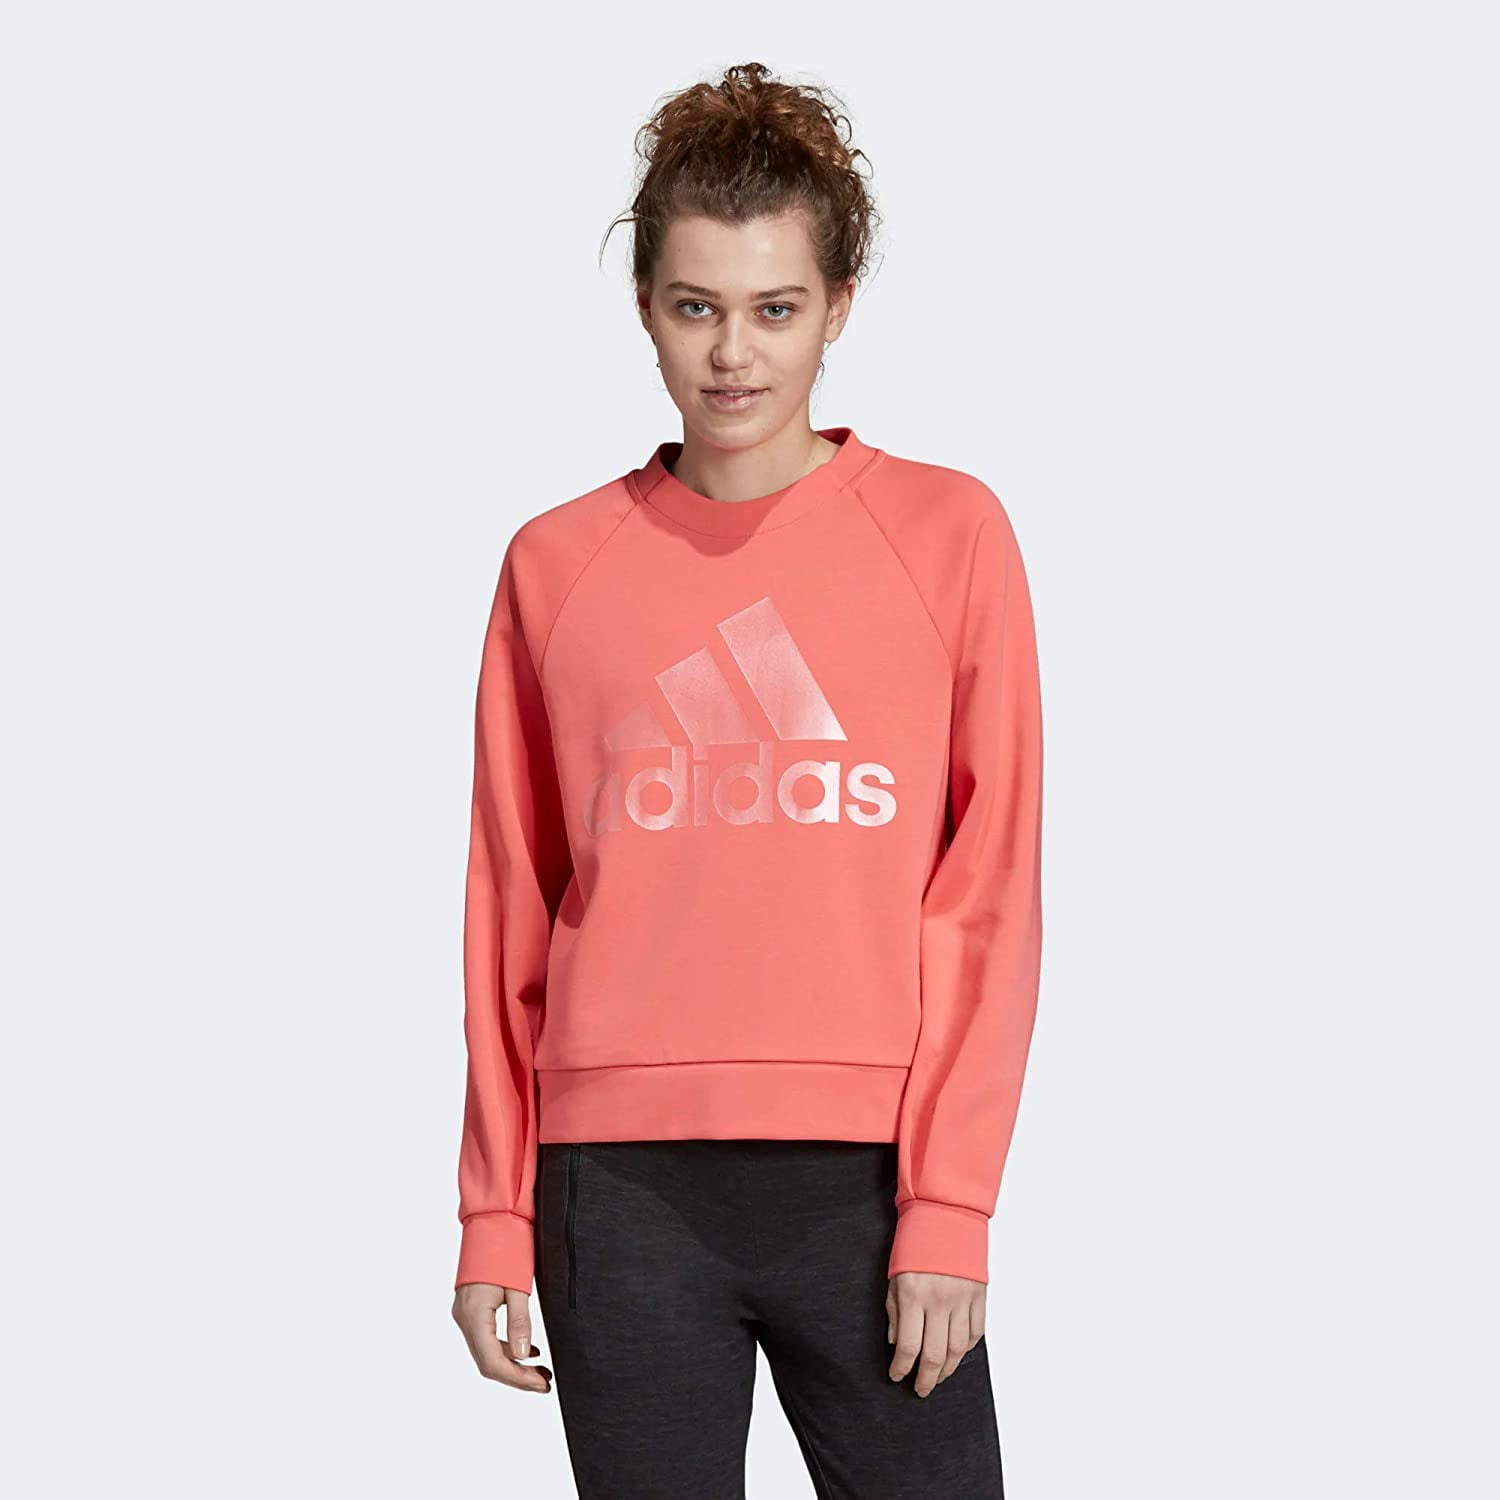 vrije tijd Opstand Vergevingsgezind Adidas Women's ID Glory Crew Pullover Sweater, Prism Pink - Walmart.com